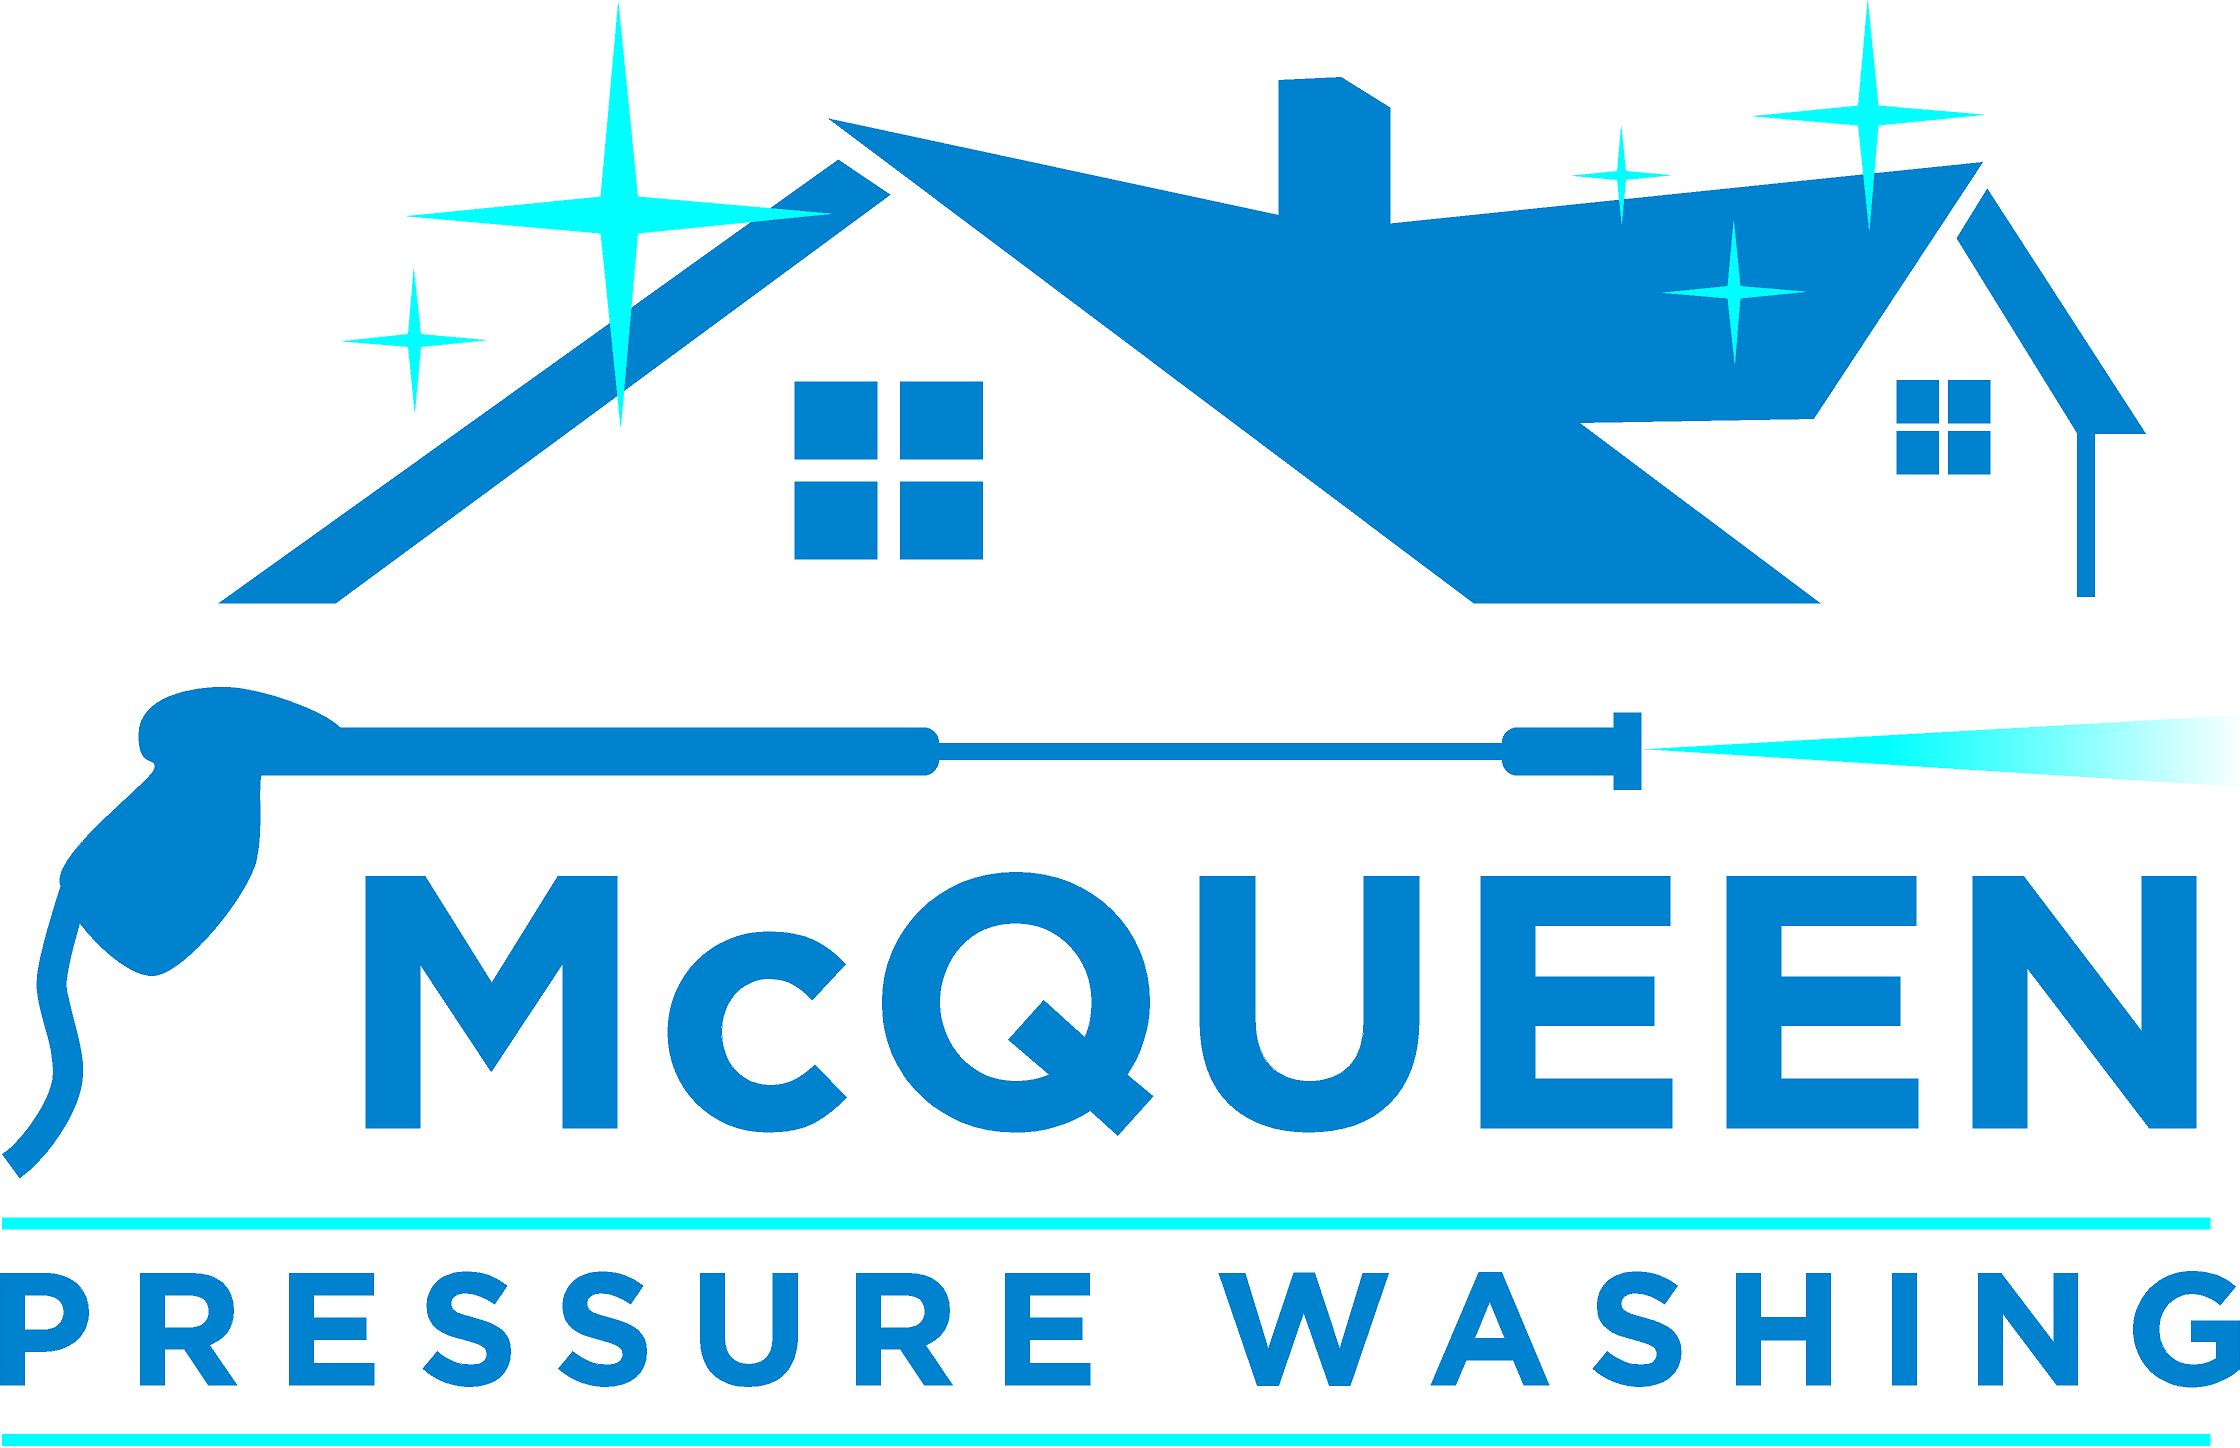 McQueen Pressure Washing, logo design, vector logo, high resolution logo design